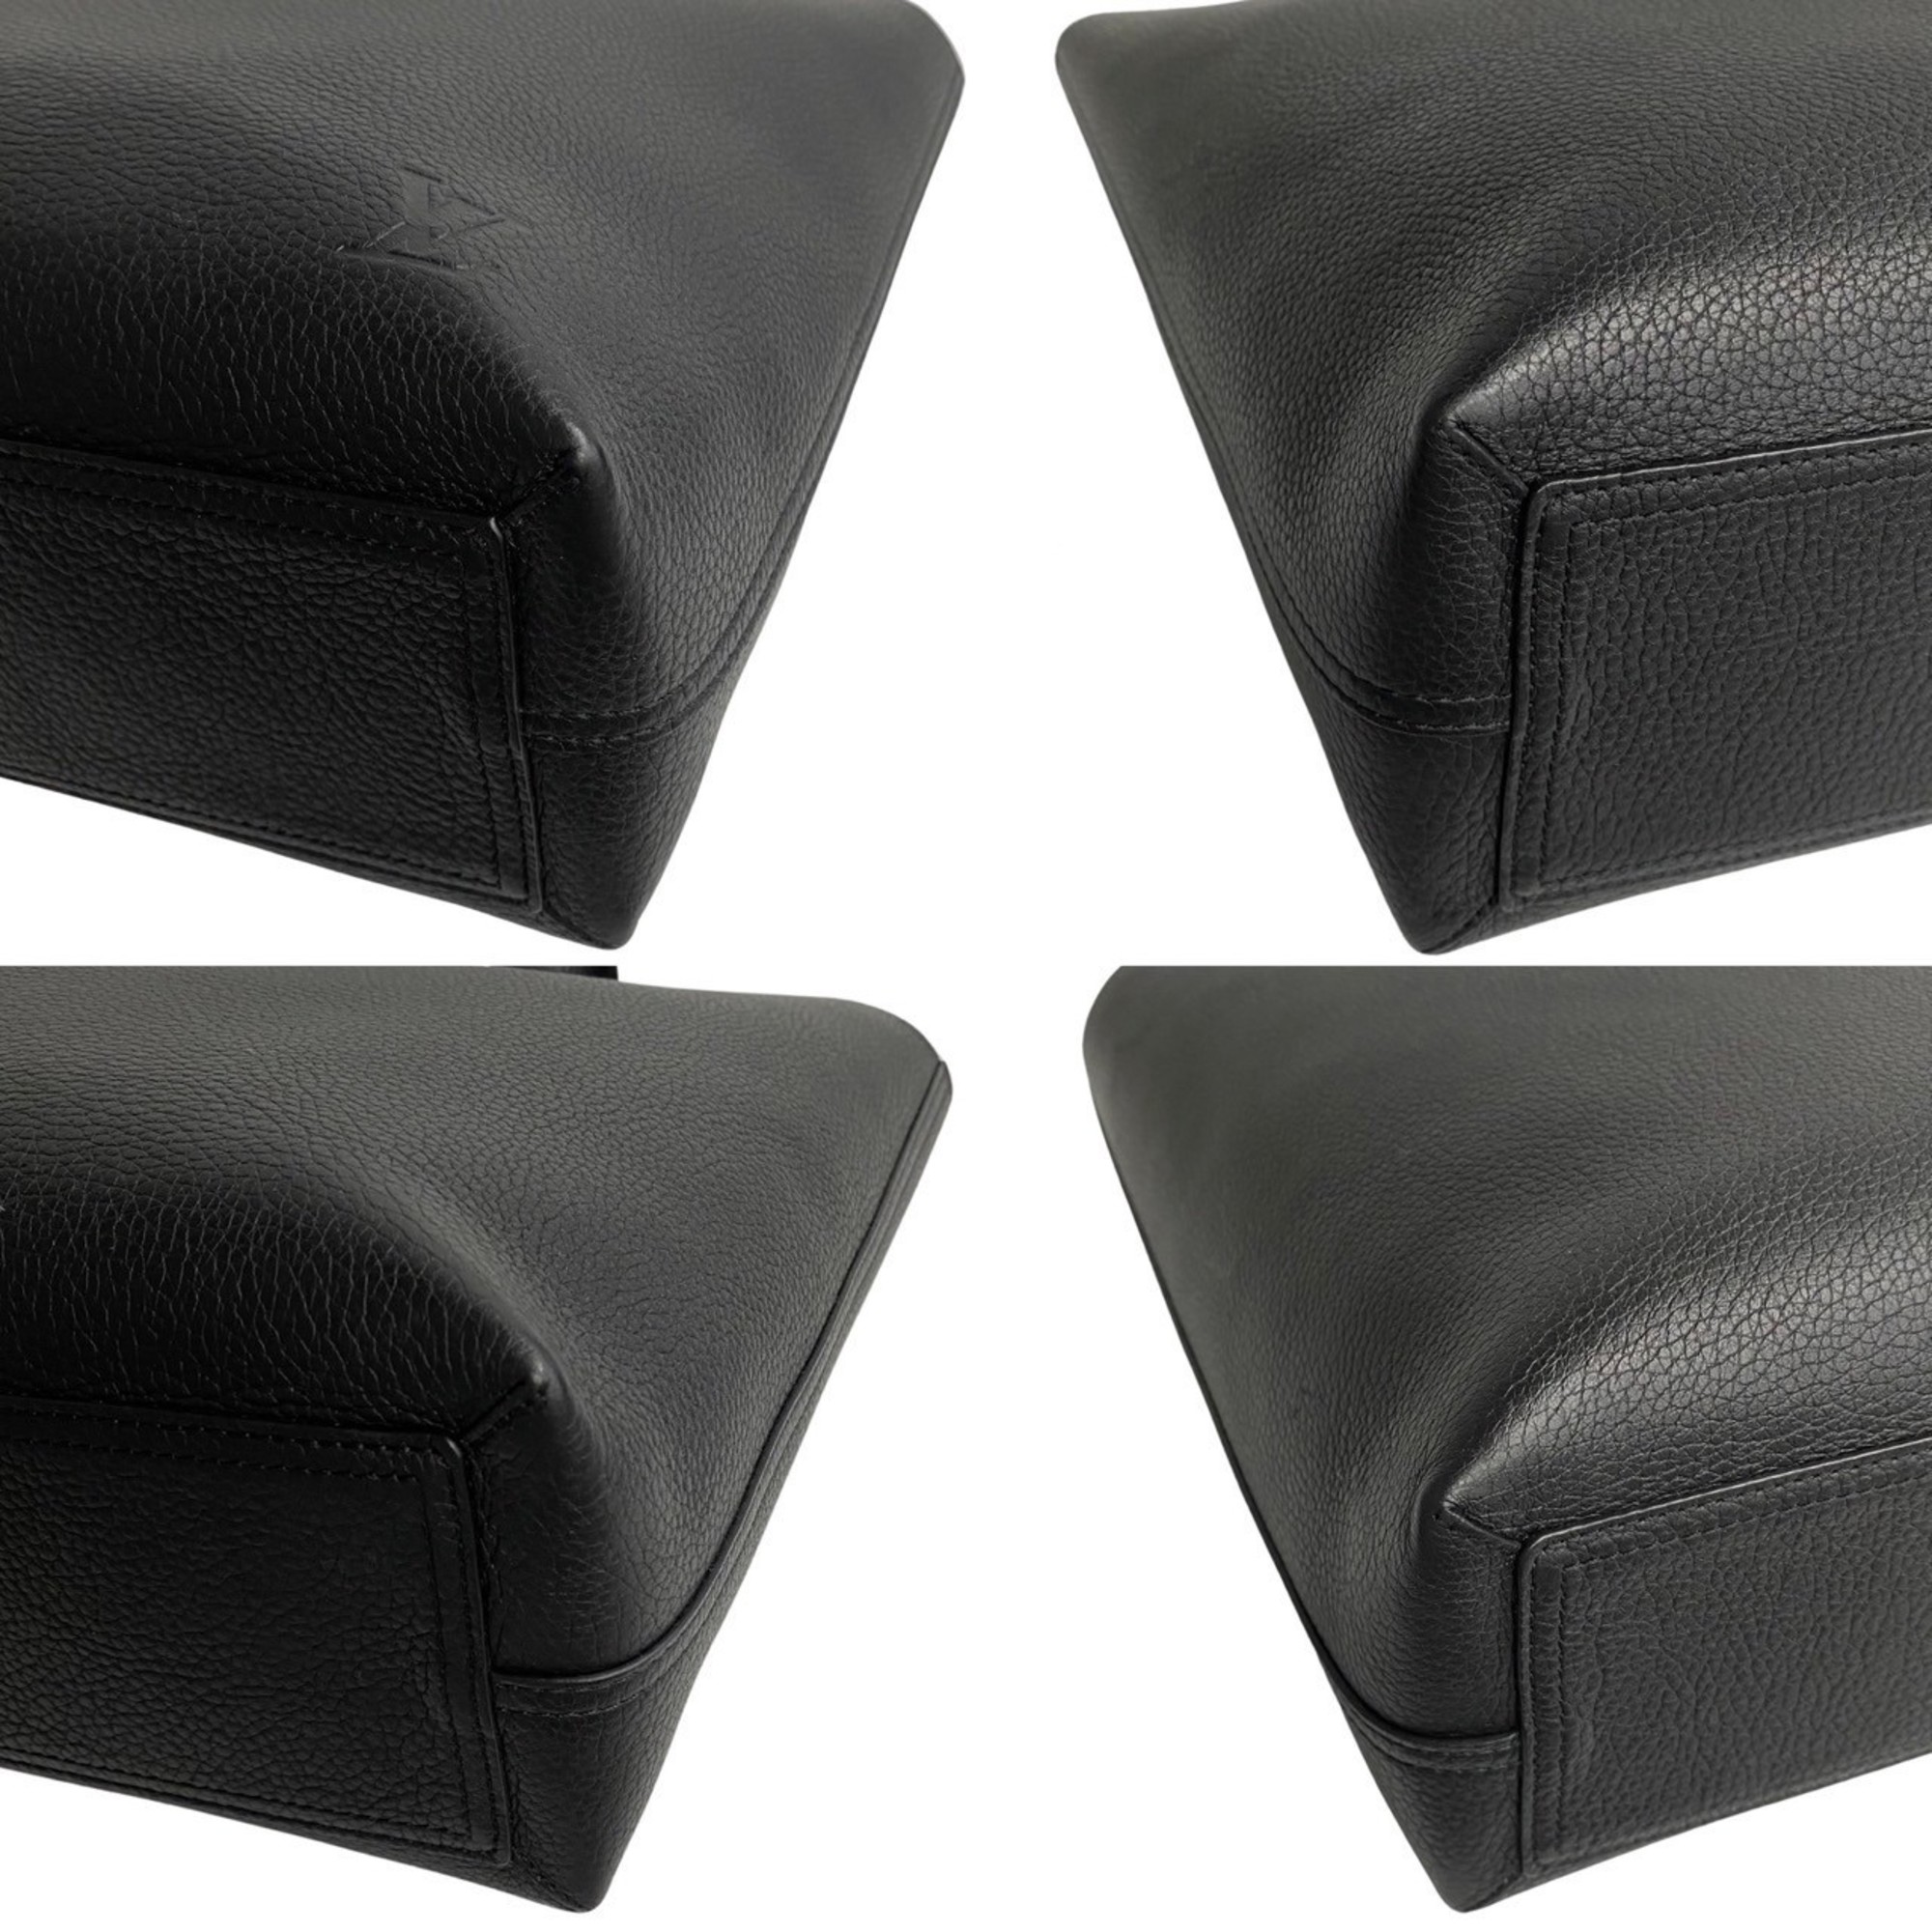 LOUIS VUITTON Cabavoyage Leather Handbag Tote Bag Black 89058